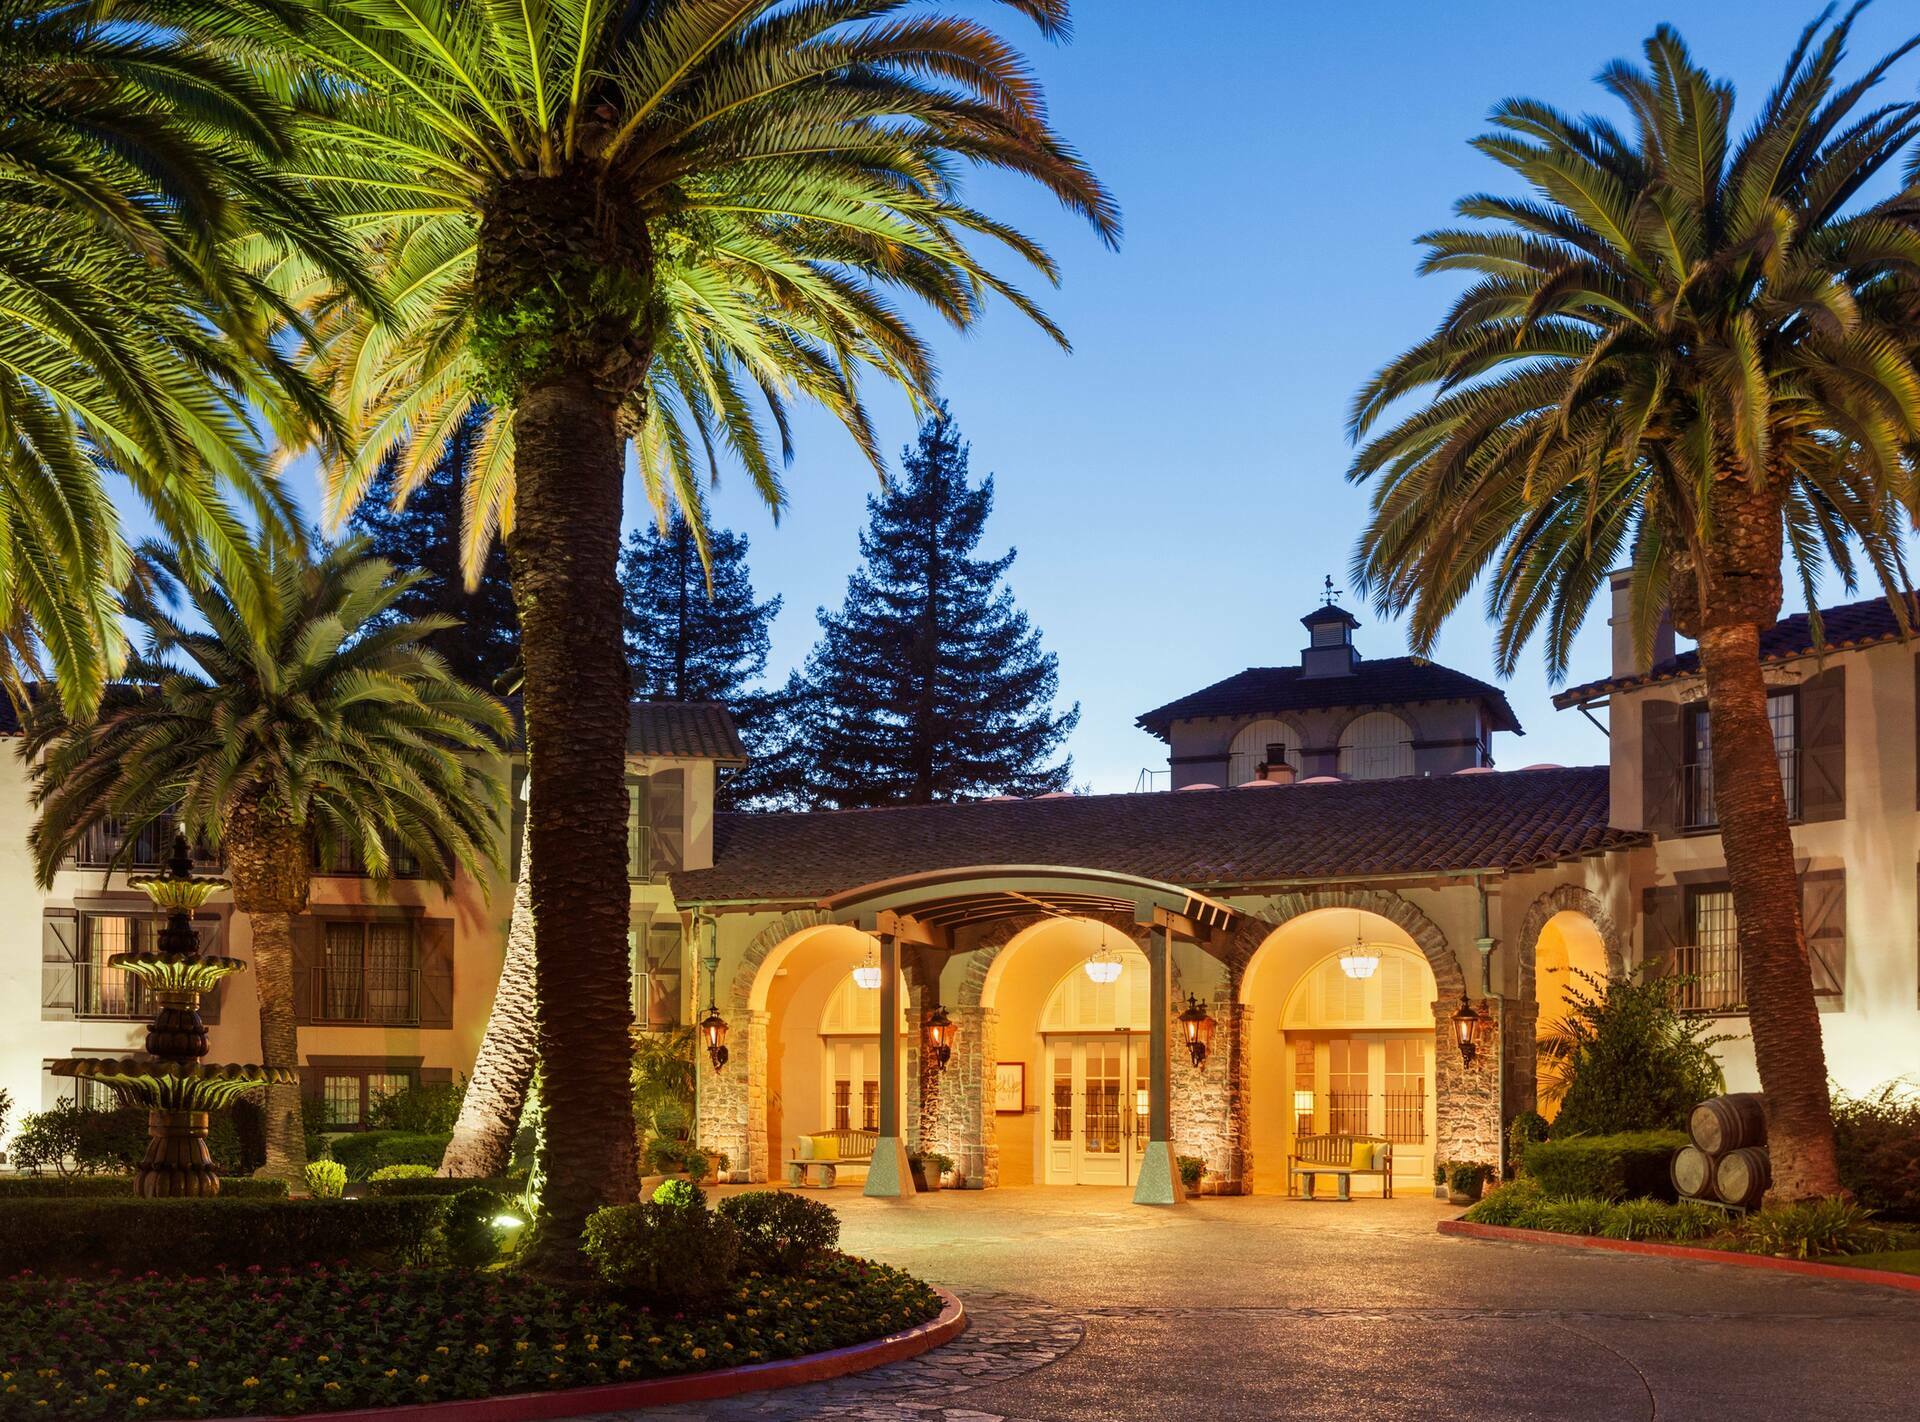 Photo of Embassy Suites by Hilton Napa Valley, Napa, CA